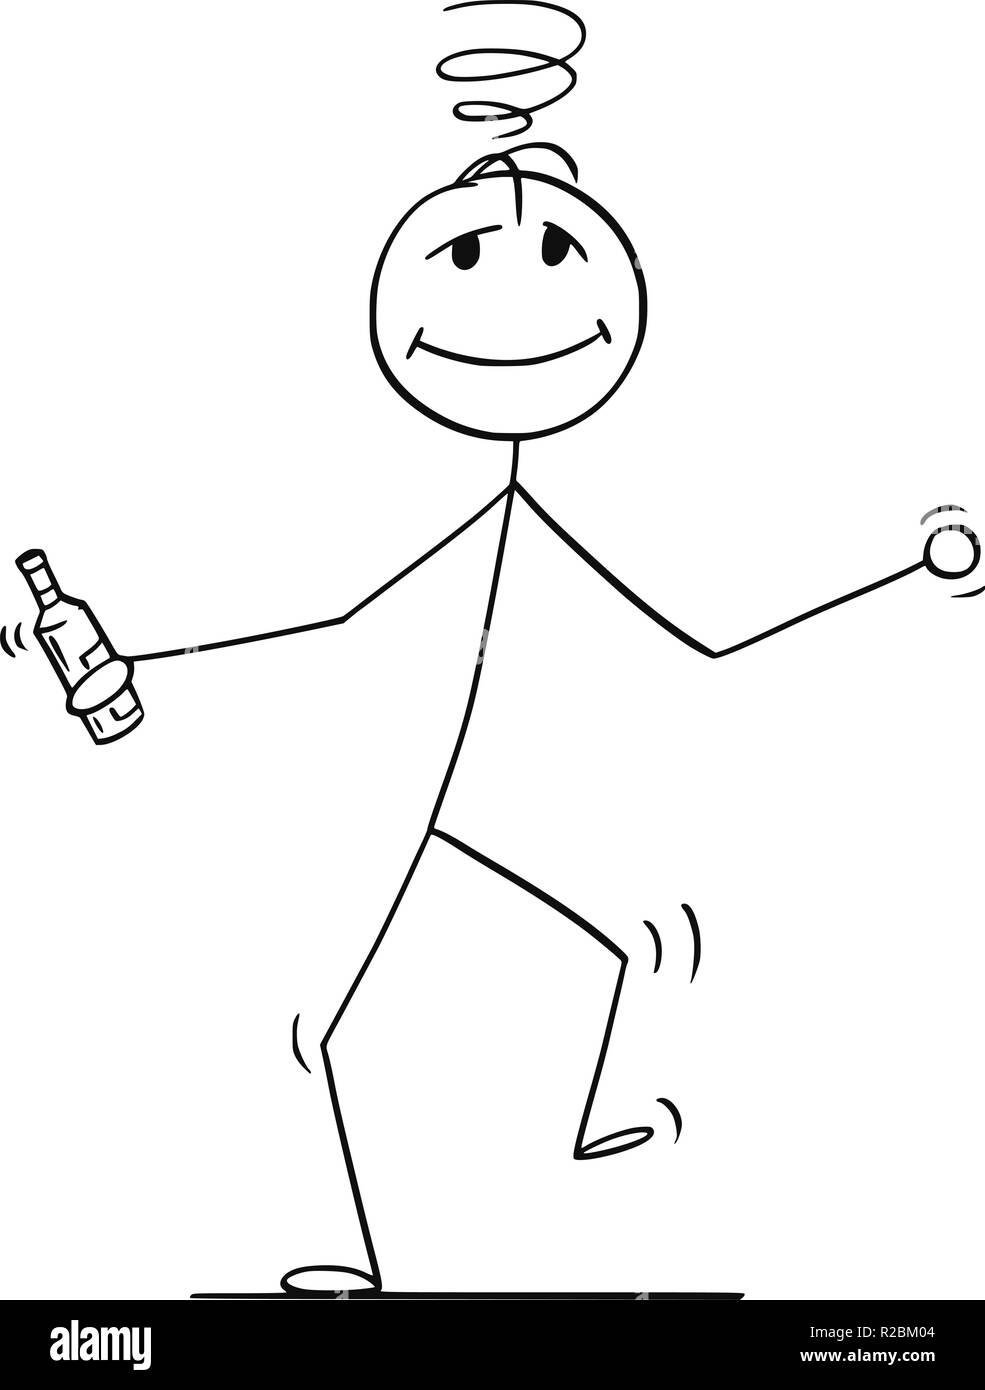 Cartoon of Drunk Man Walking or Dancing With Bottle Stock Vector